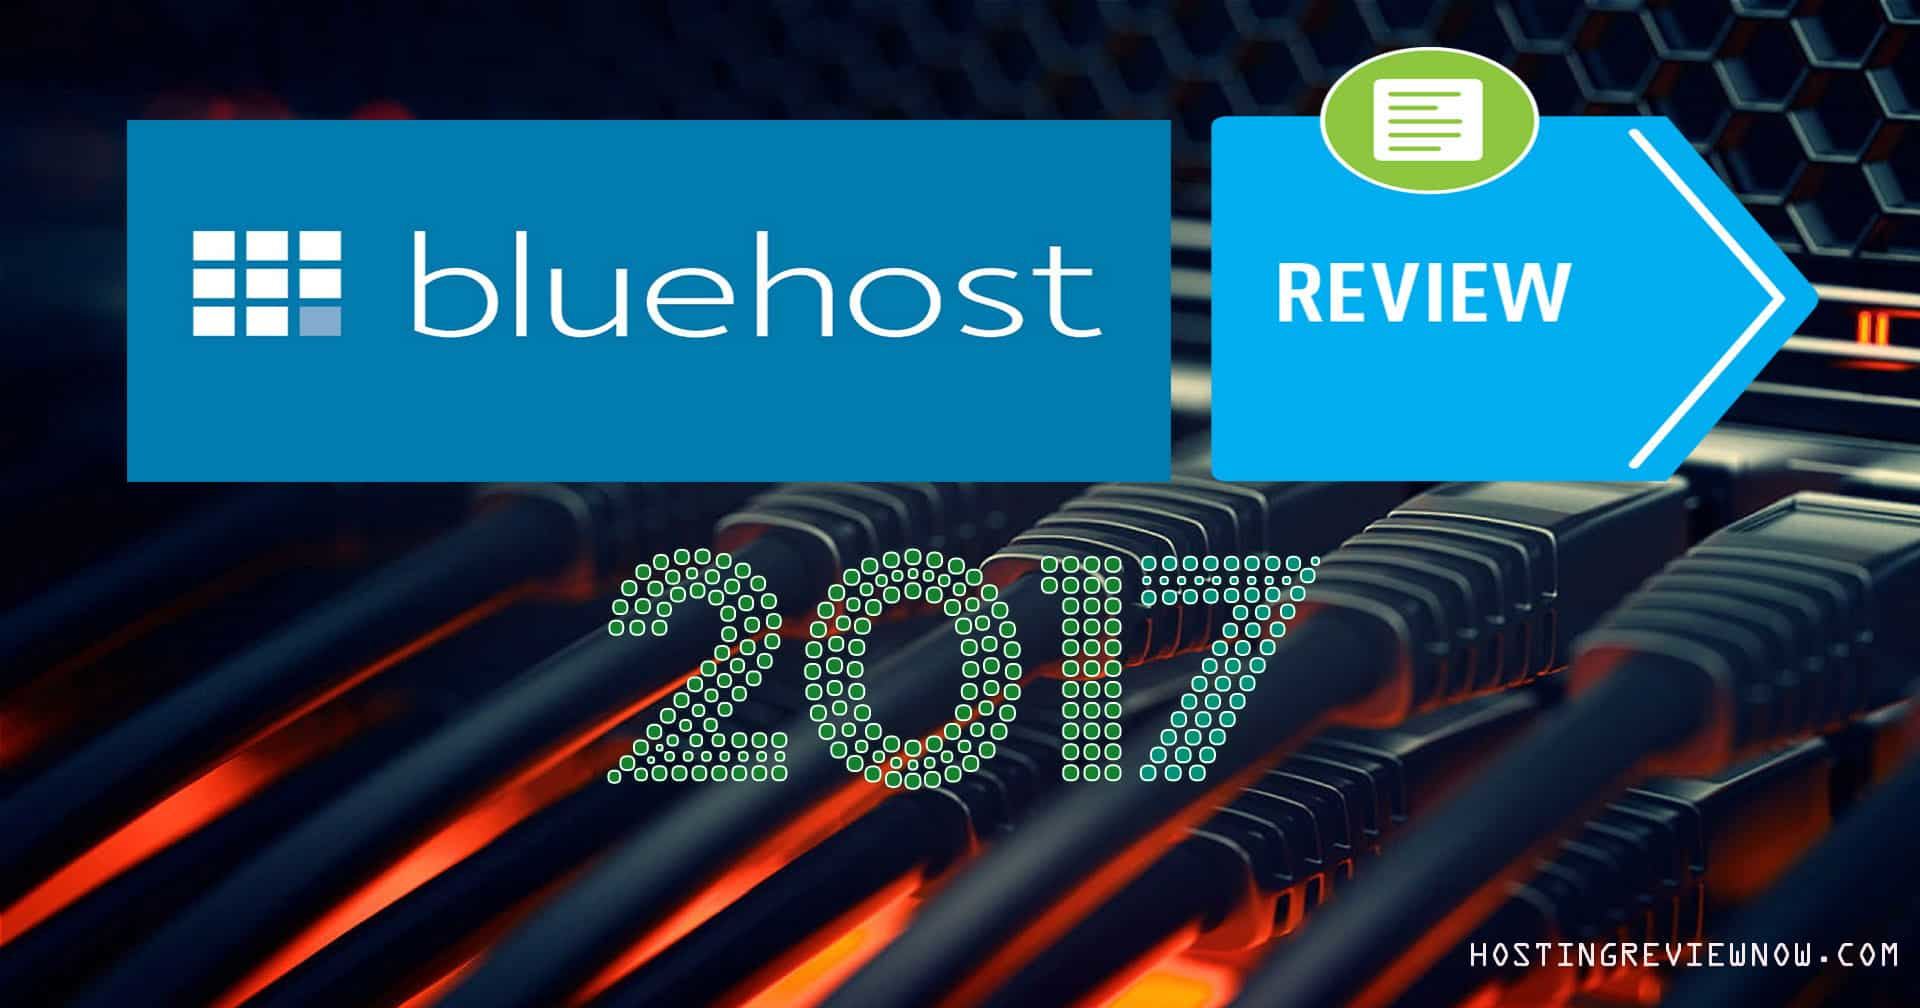 bluehost review, Bluehost Wordpress Hosting Review, Bluehost bluehost review 2017